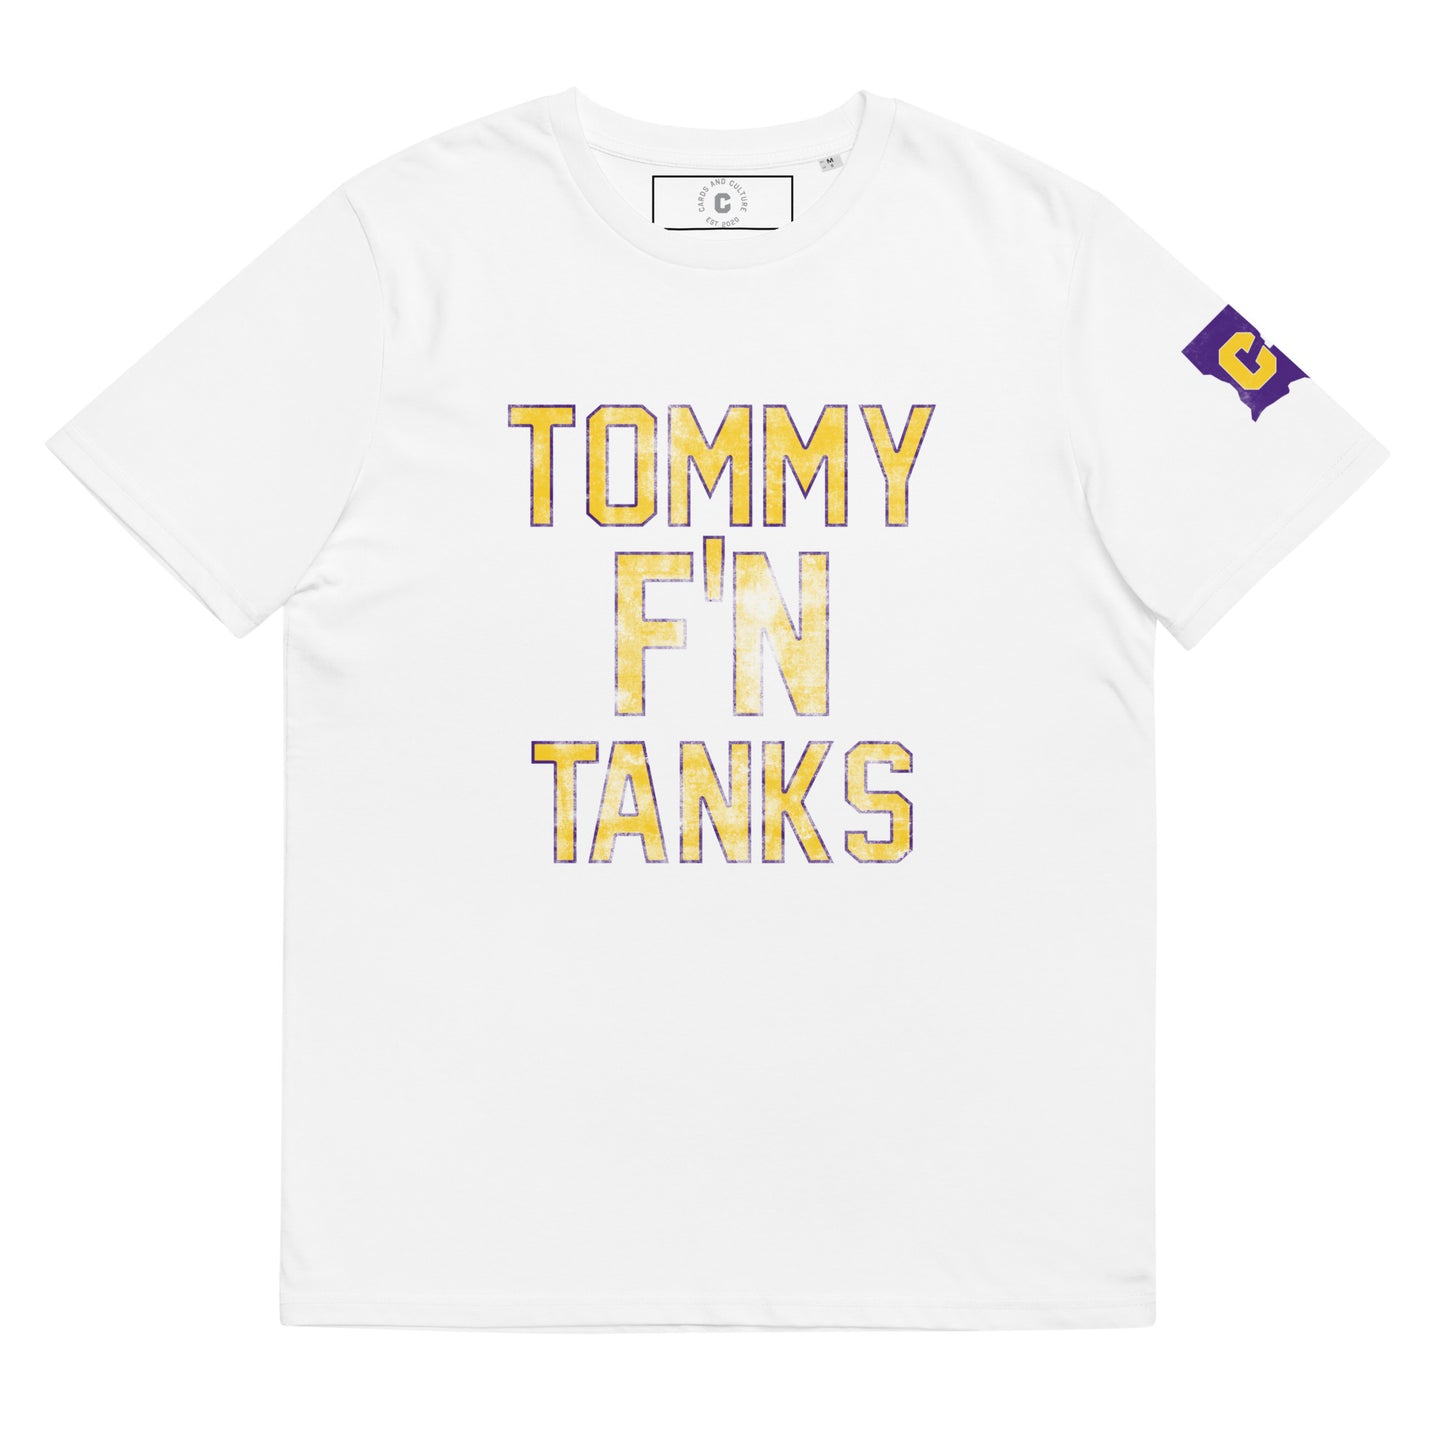 Tommy F'n Tanks Unisex organic cotton t-shirt